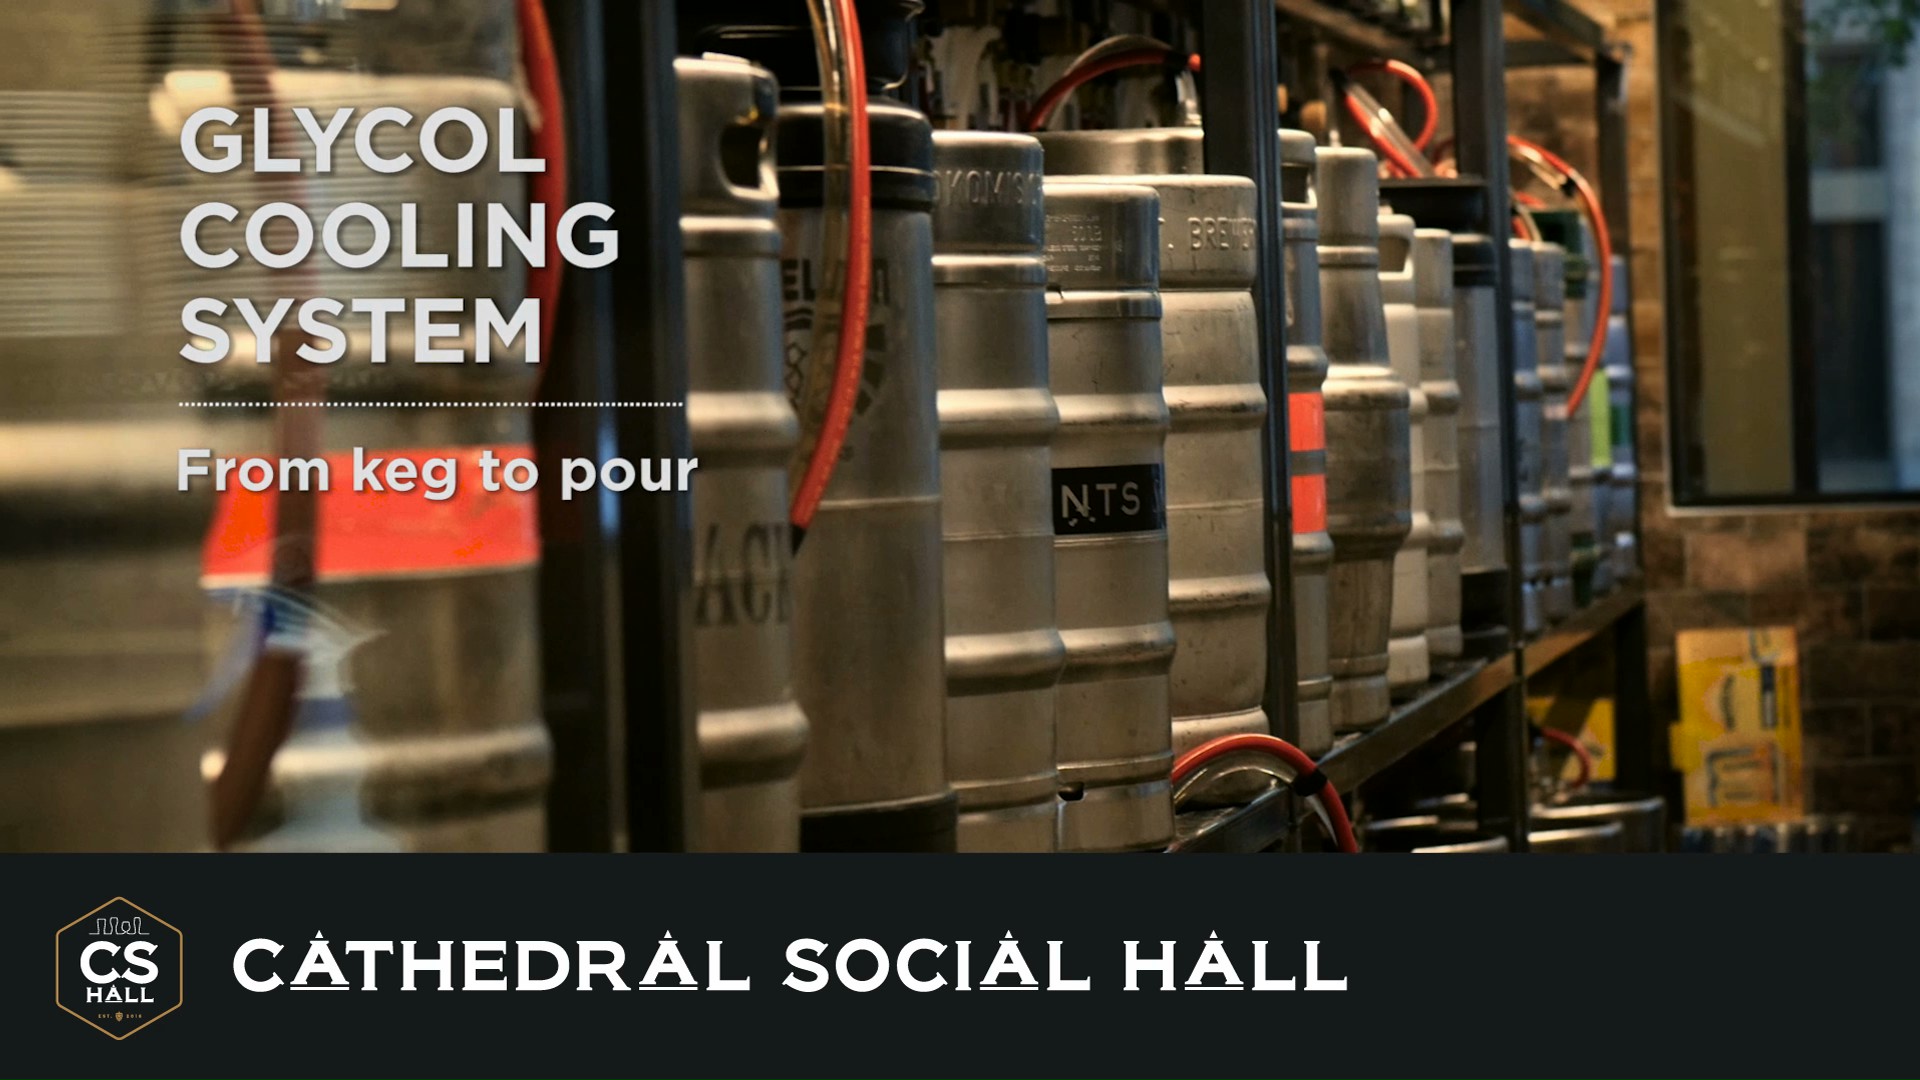 Cathedral Social Hall, Social, Cathedral Social Hall - Team - Mike, Portfolio Image, Glycol Cooling System